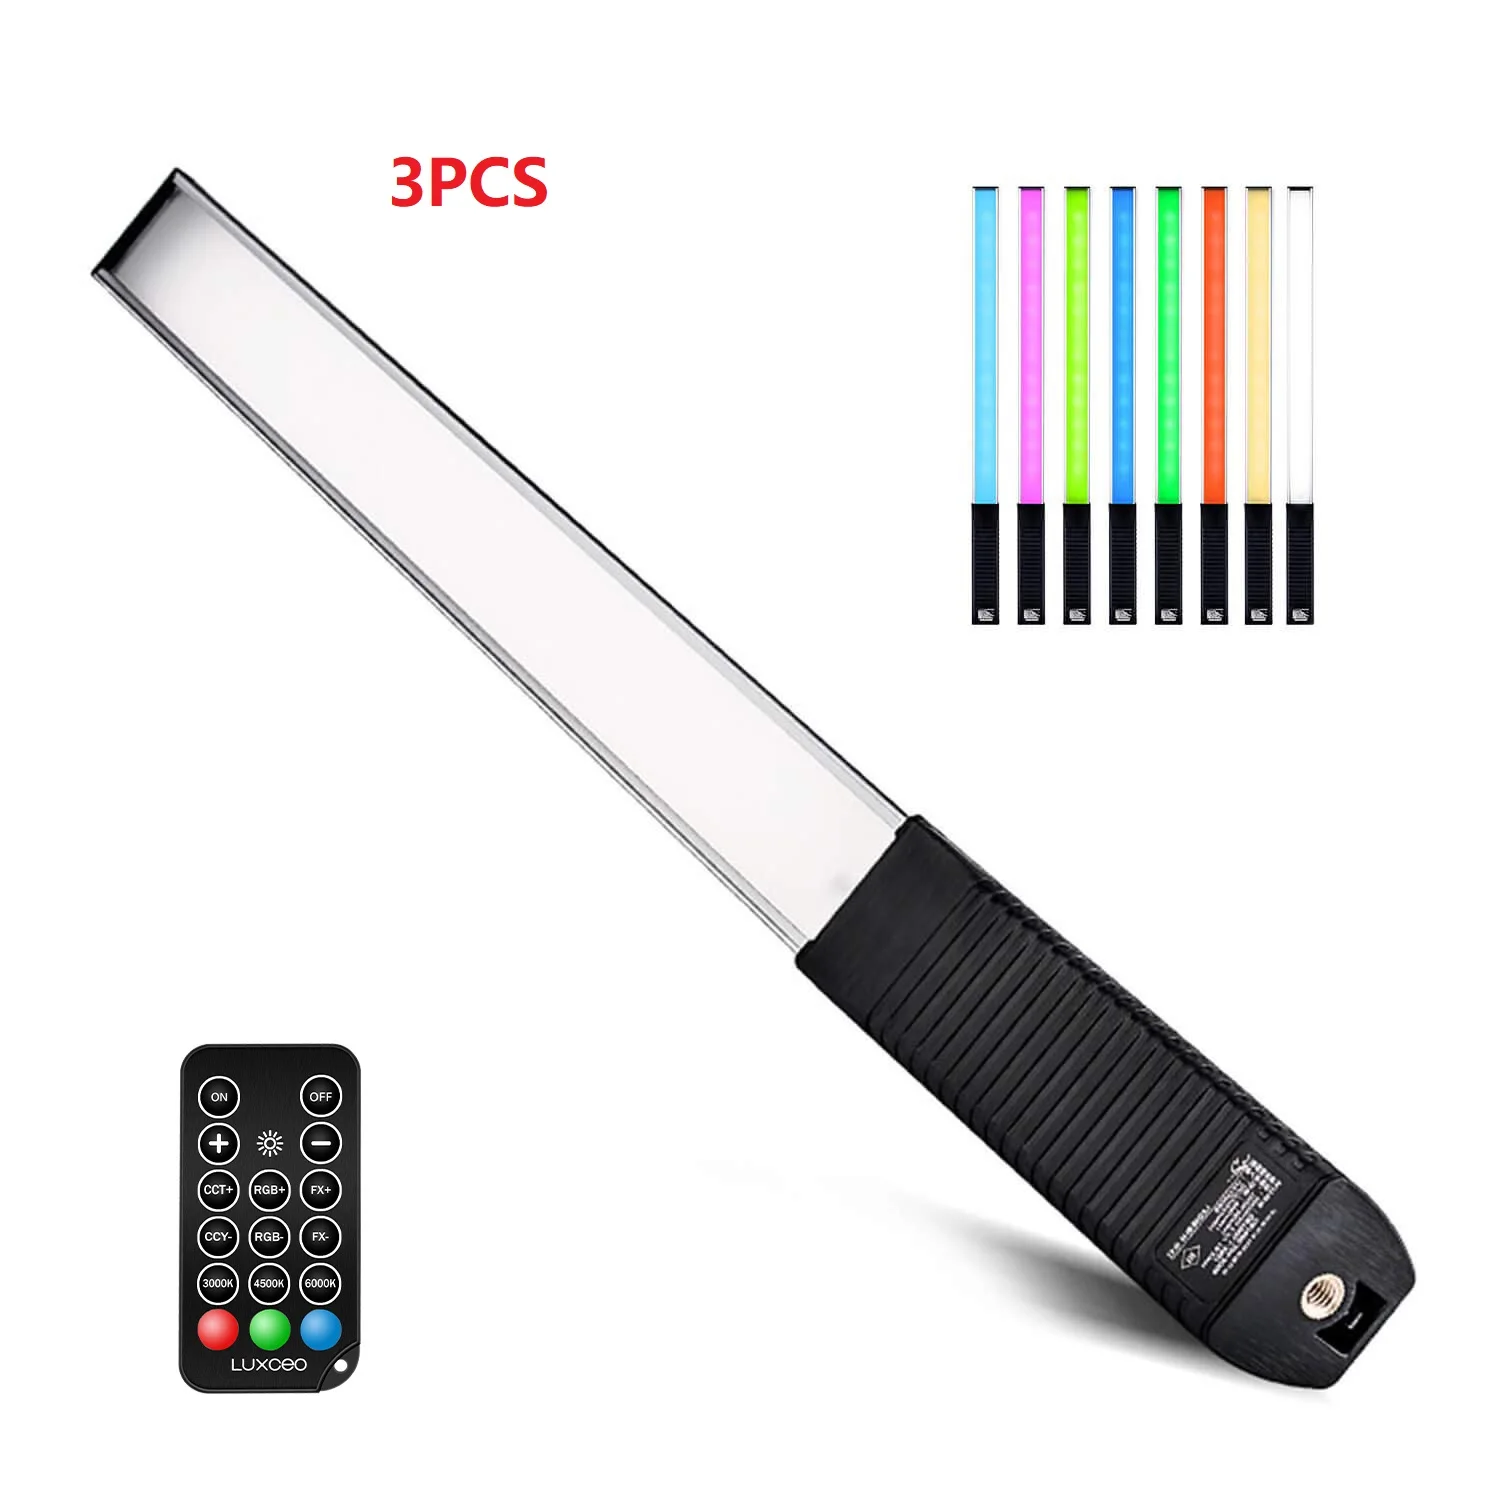 

LUXCEO 3PC Q508A LED RGB Video Light Baton Remote Control 3000K-6000K 36Colors Studio Photo Lighting Bar For Youtube TikTok Vlog